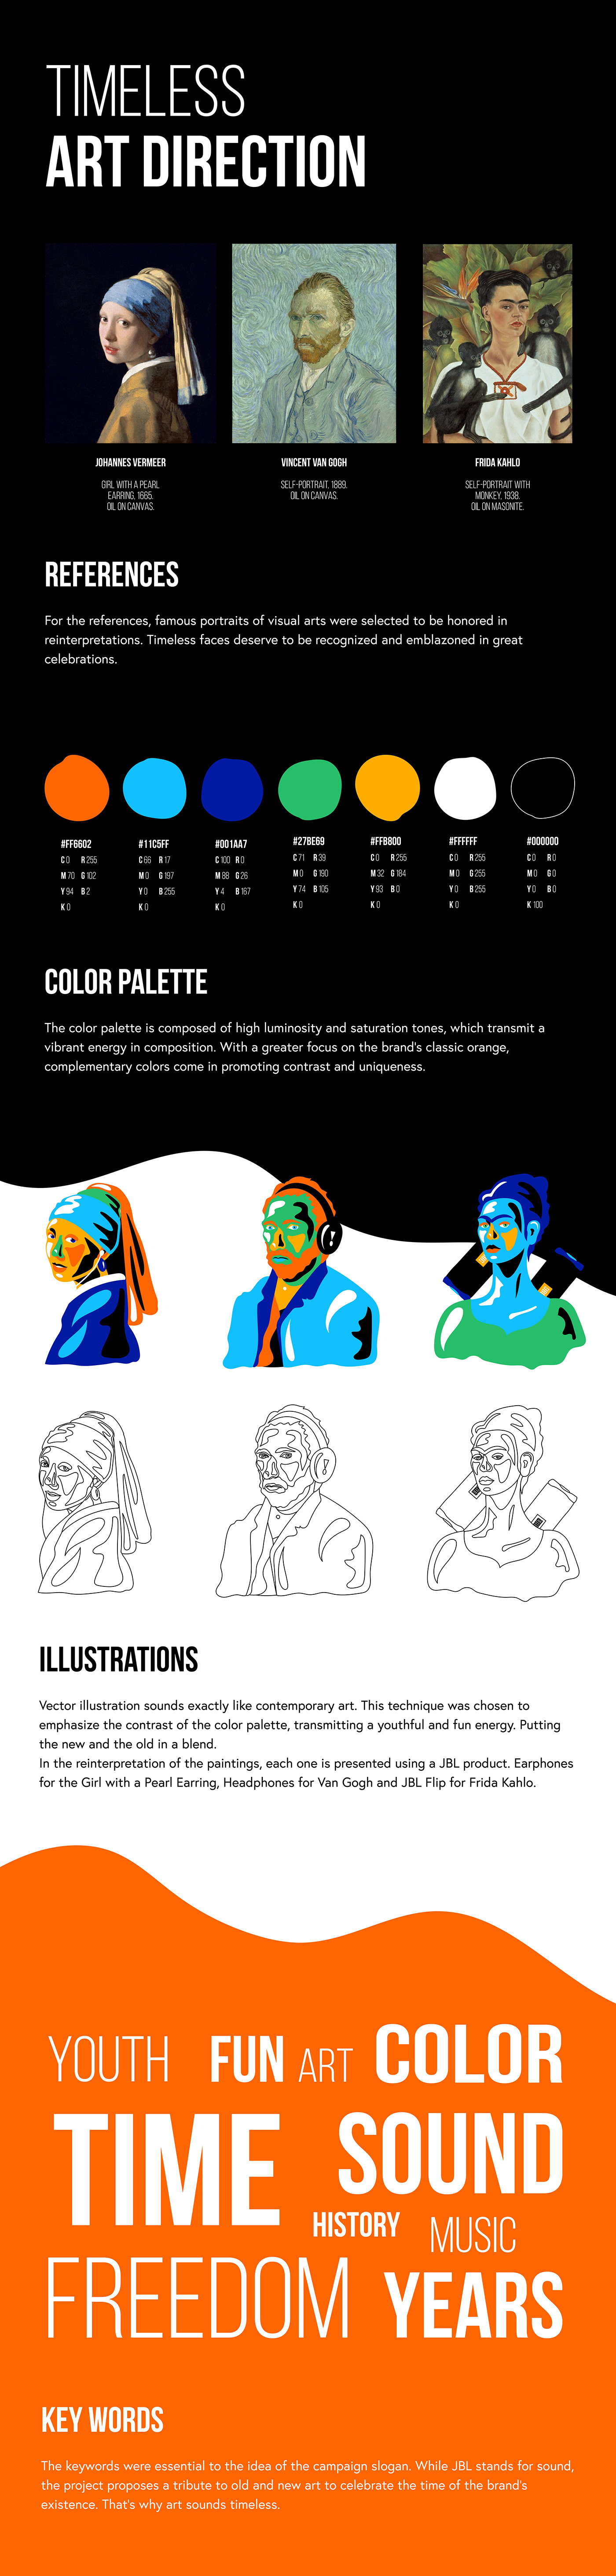 art art direction  campaign color palette culture Frida Kahlo graphic design  social media Technology van gogh